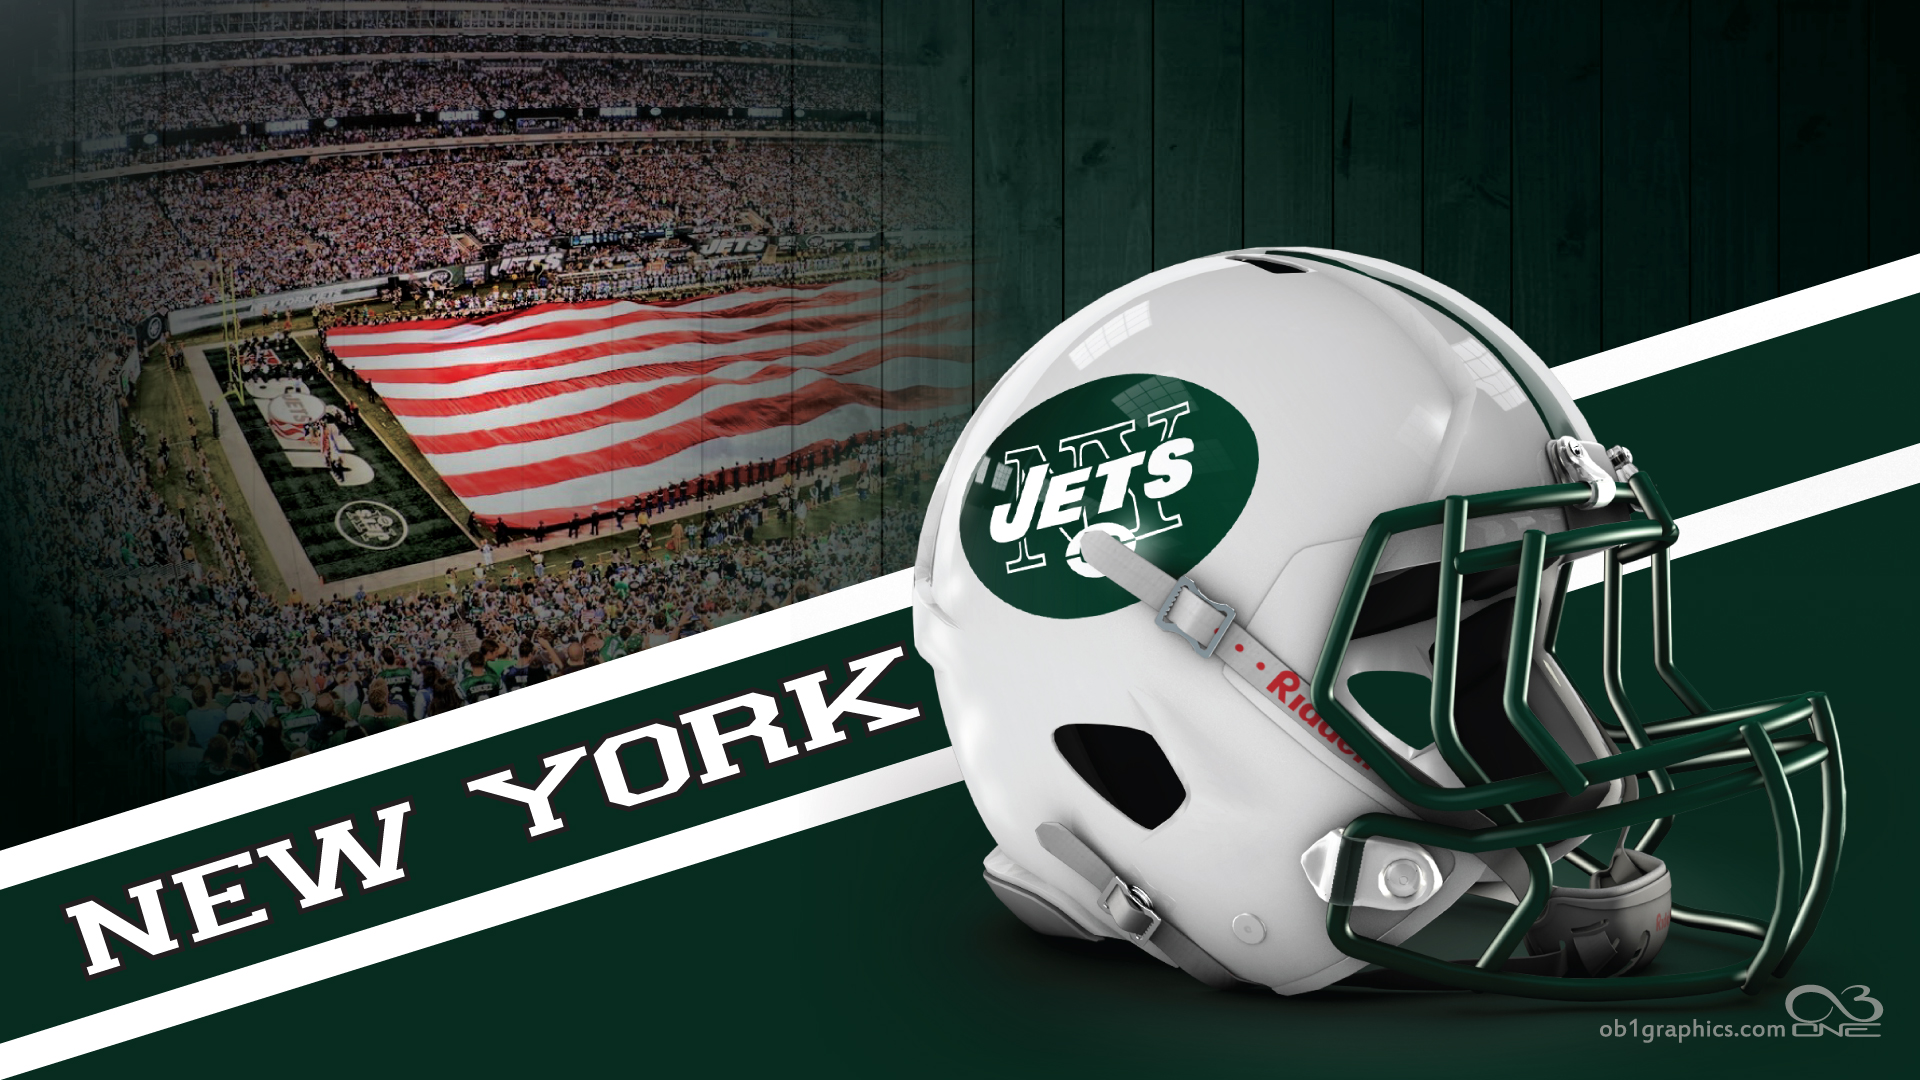 This New York Jets Desktop Background Wallpaper